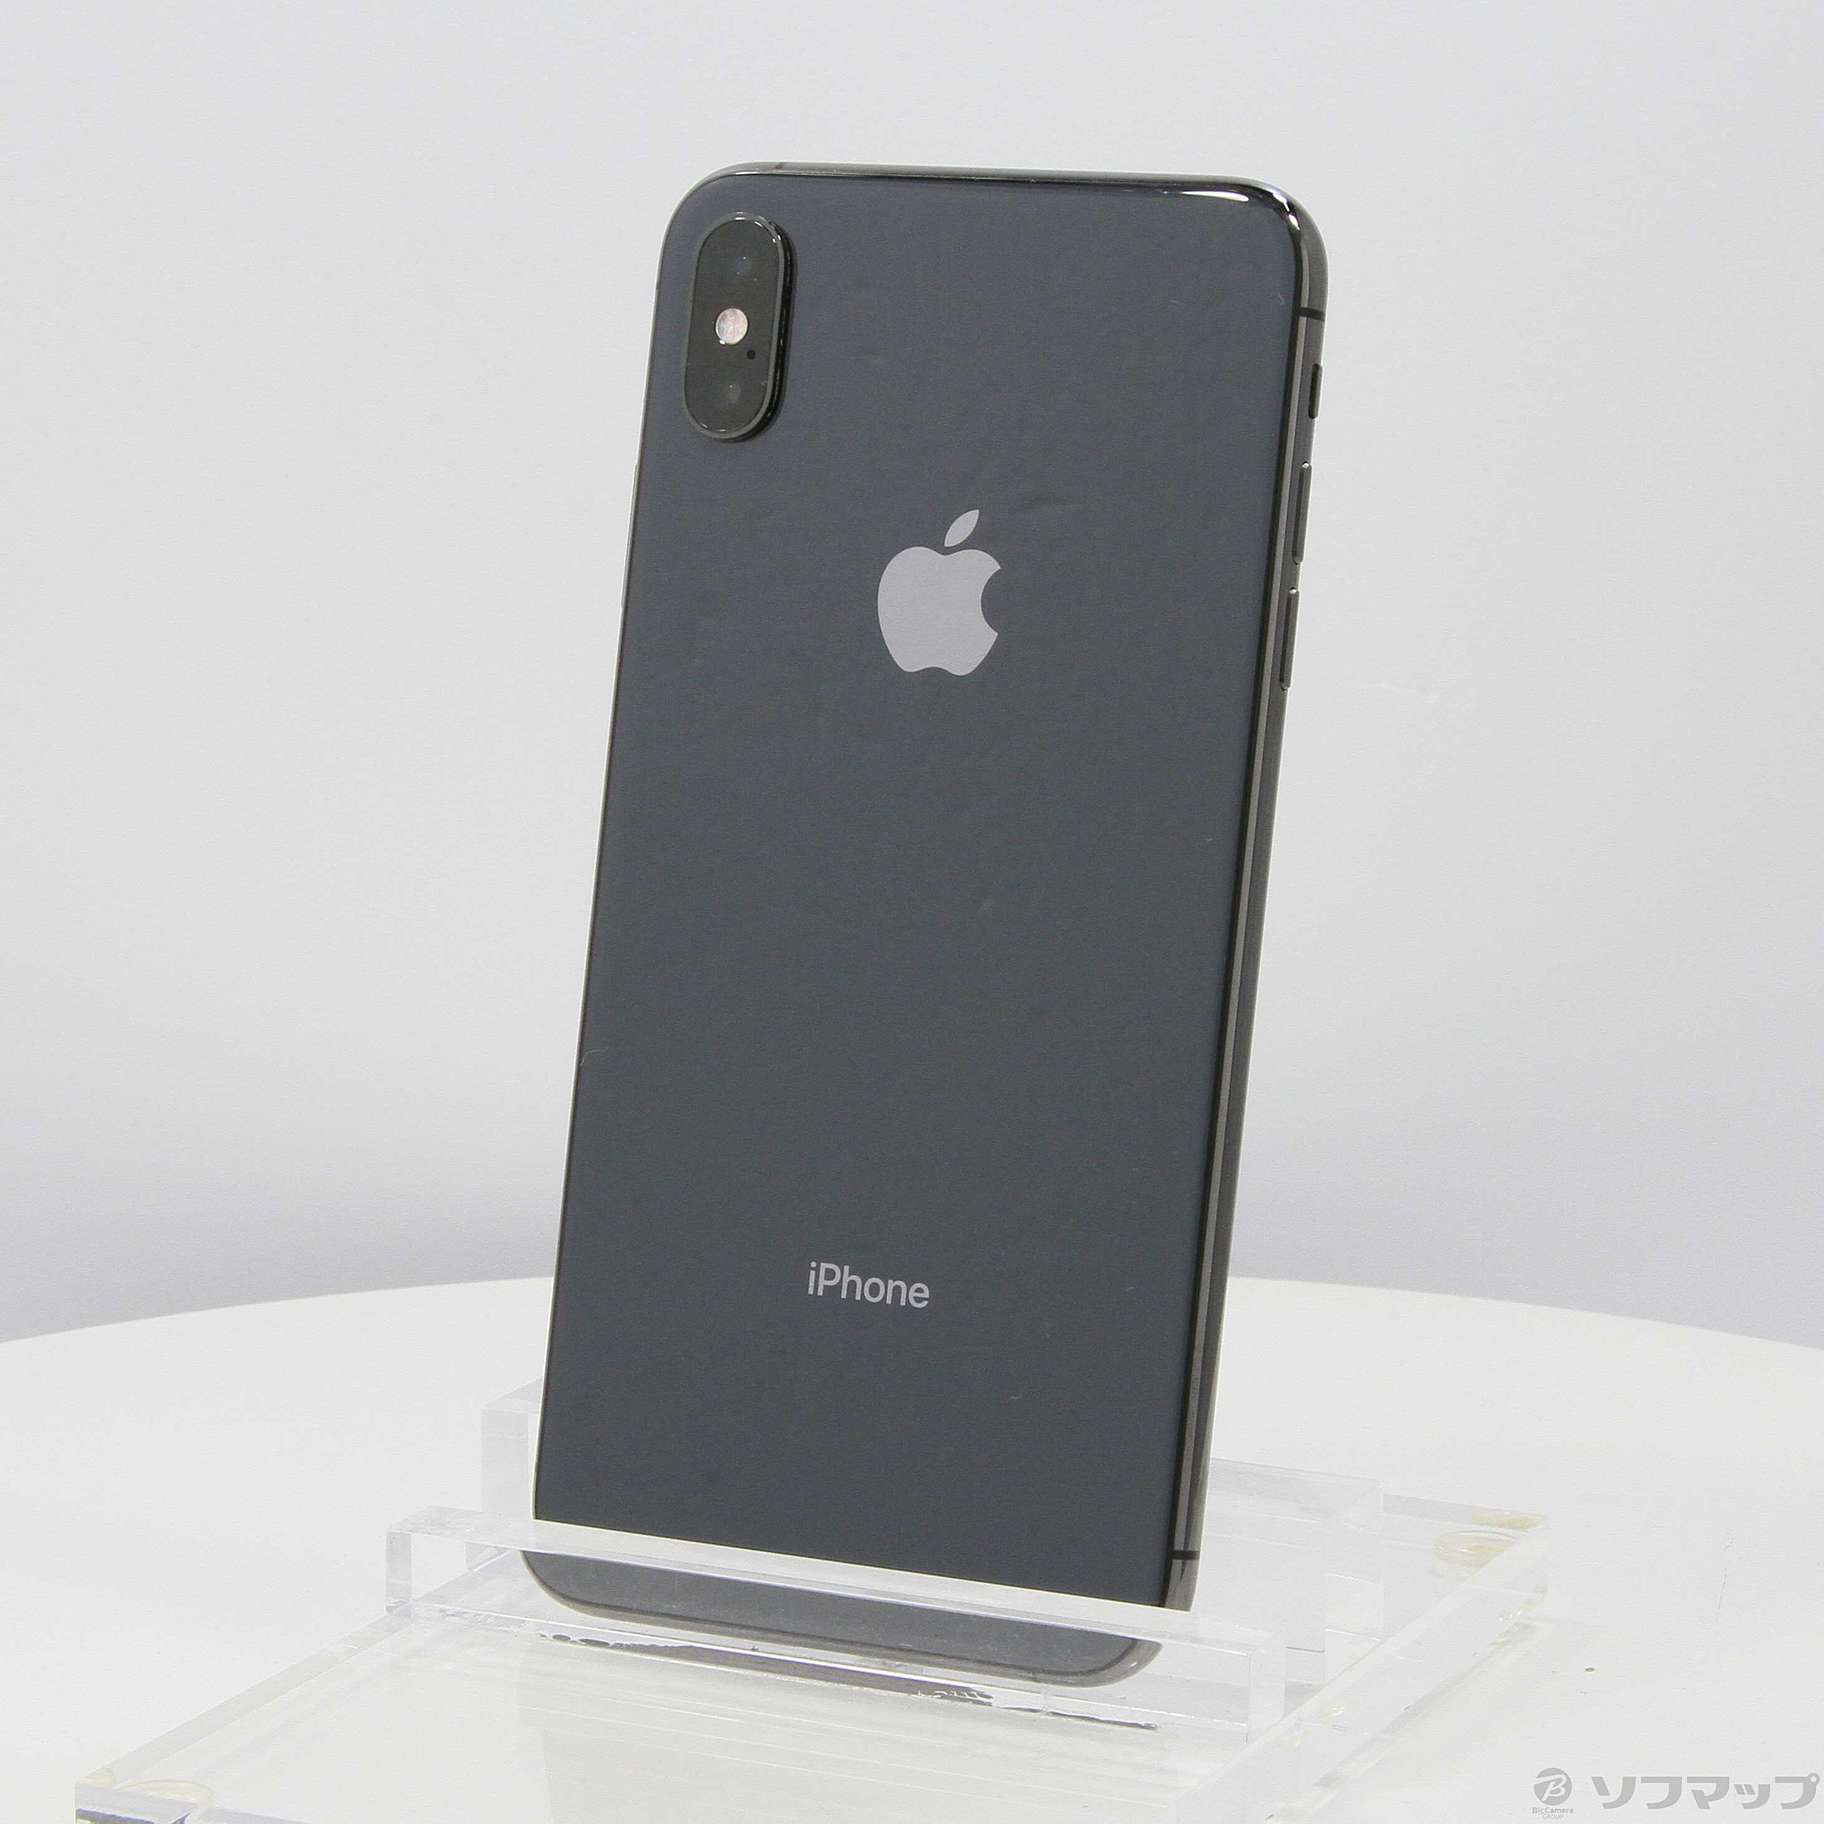 9,030円iPhone Xs Space Gray 256 GB Softbank